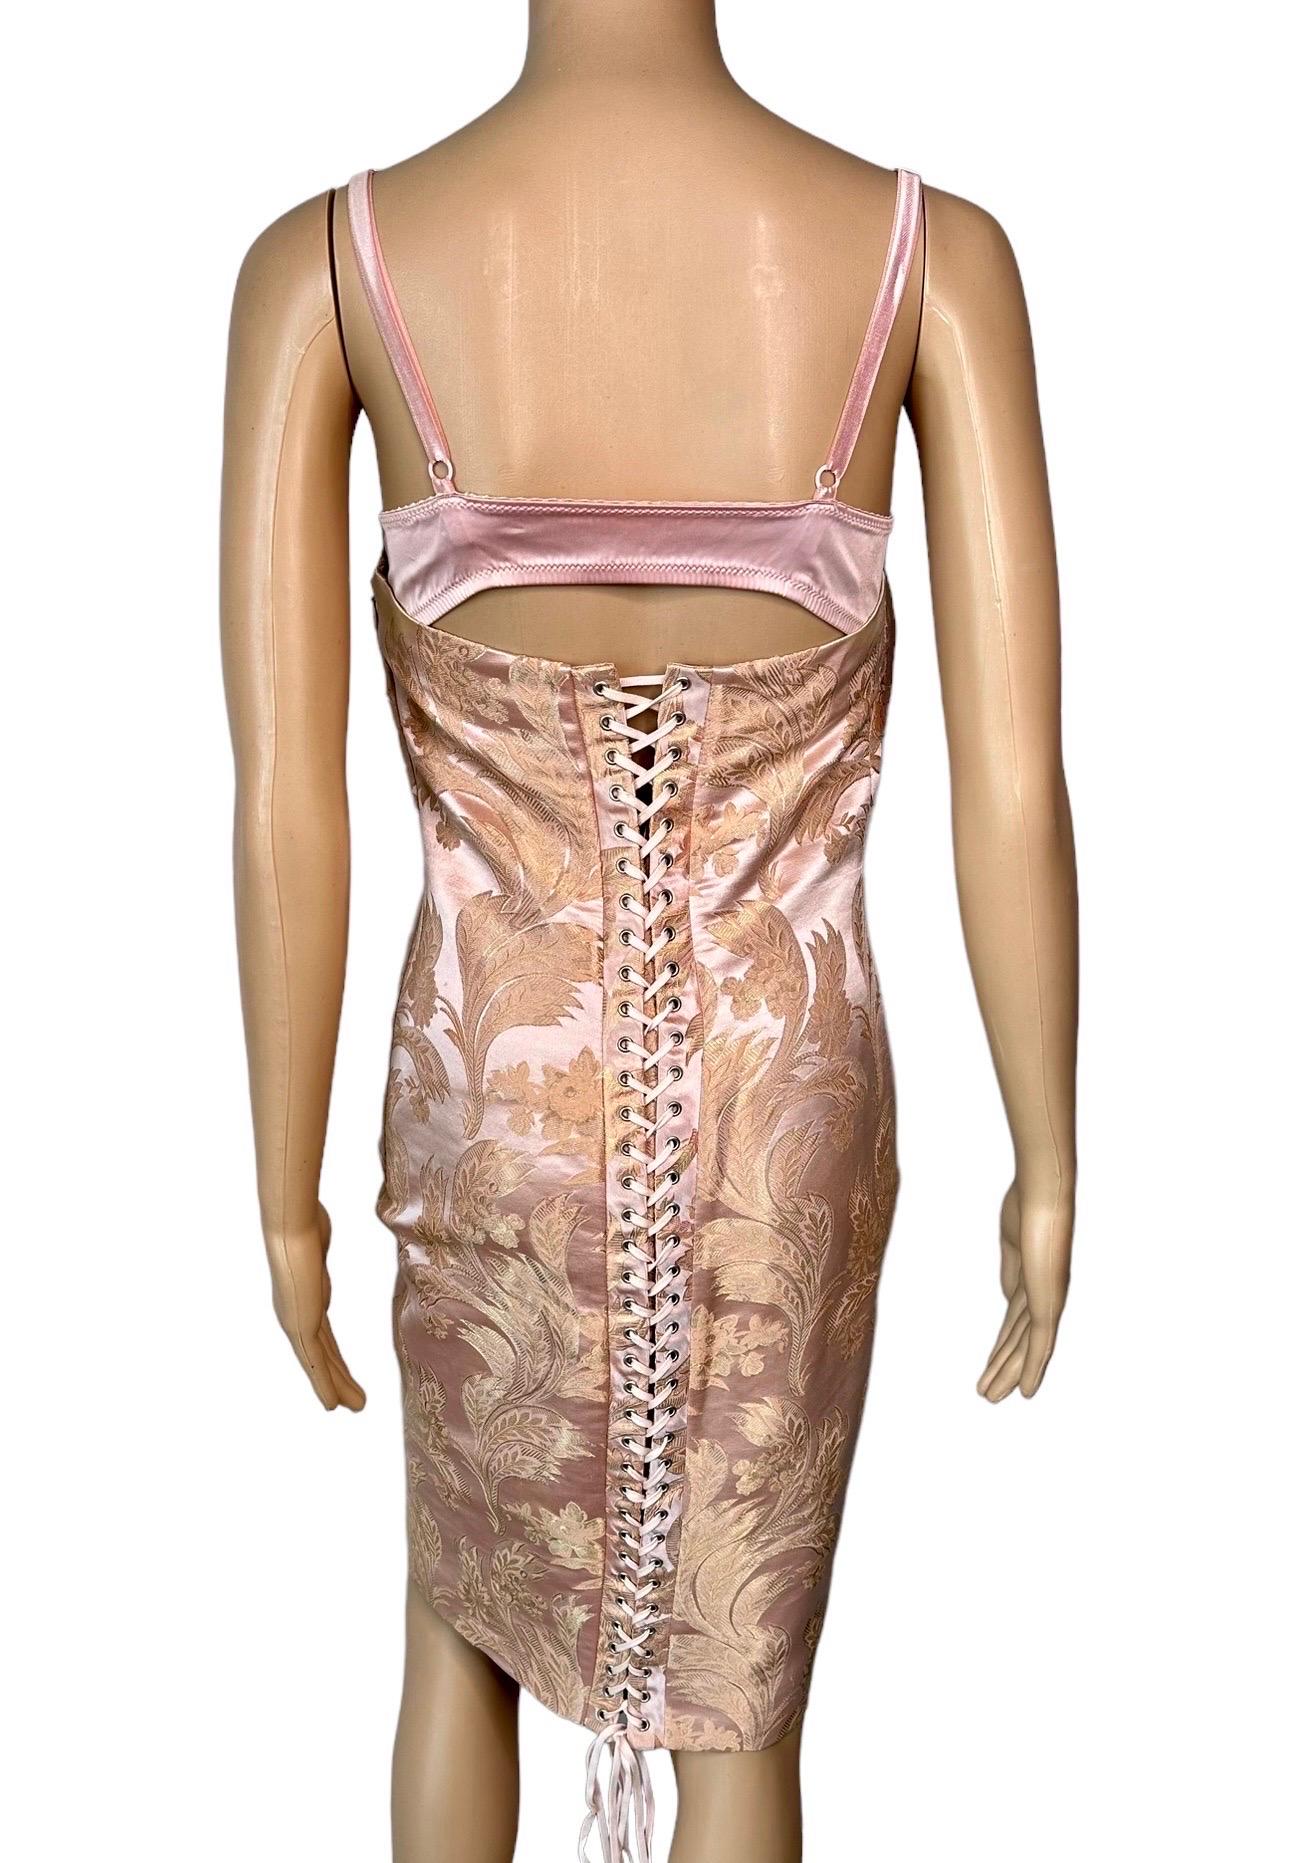 Dolce & Gabbana S/S 2003 Corset Lace-Up Bustier Bra Bodycon Midi Dress For Sale 6